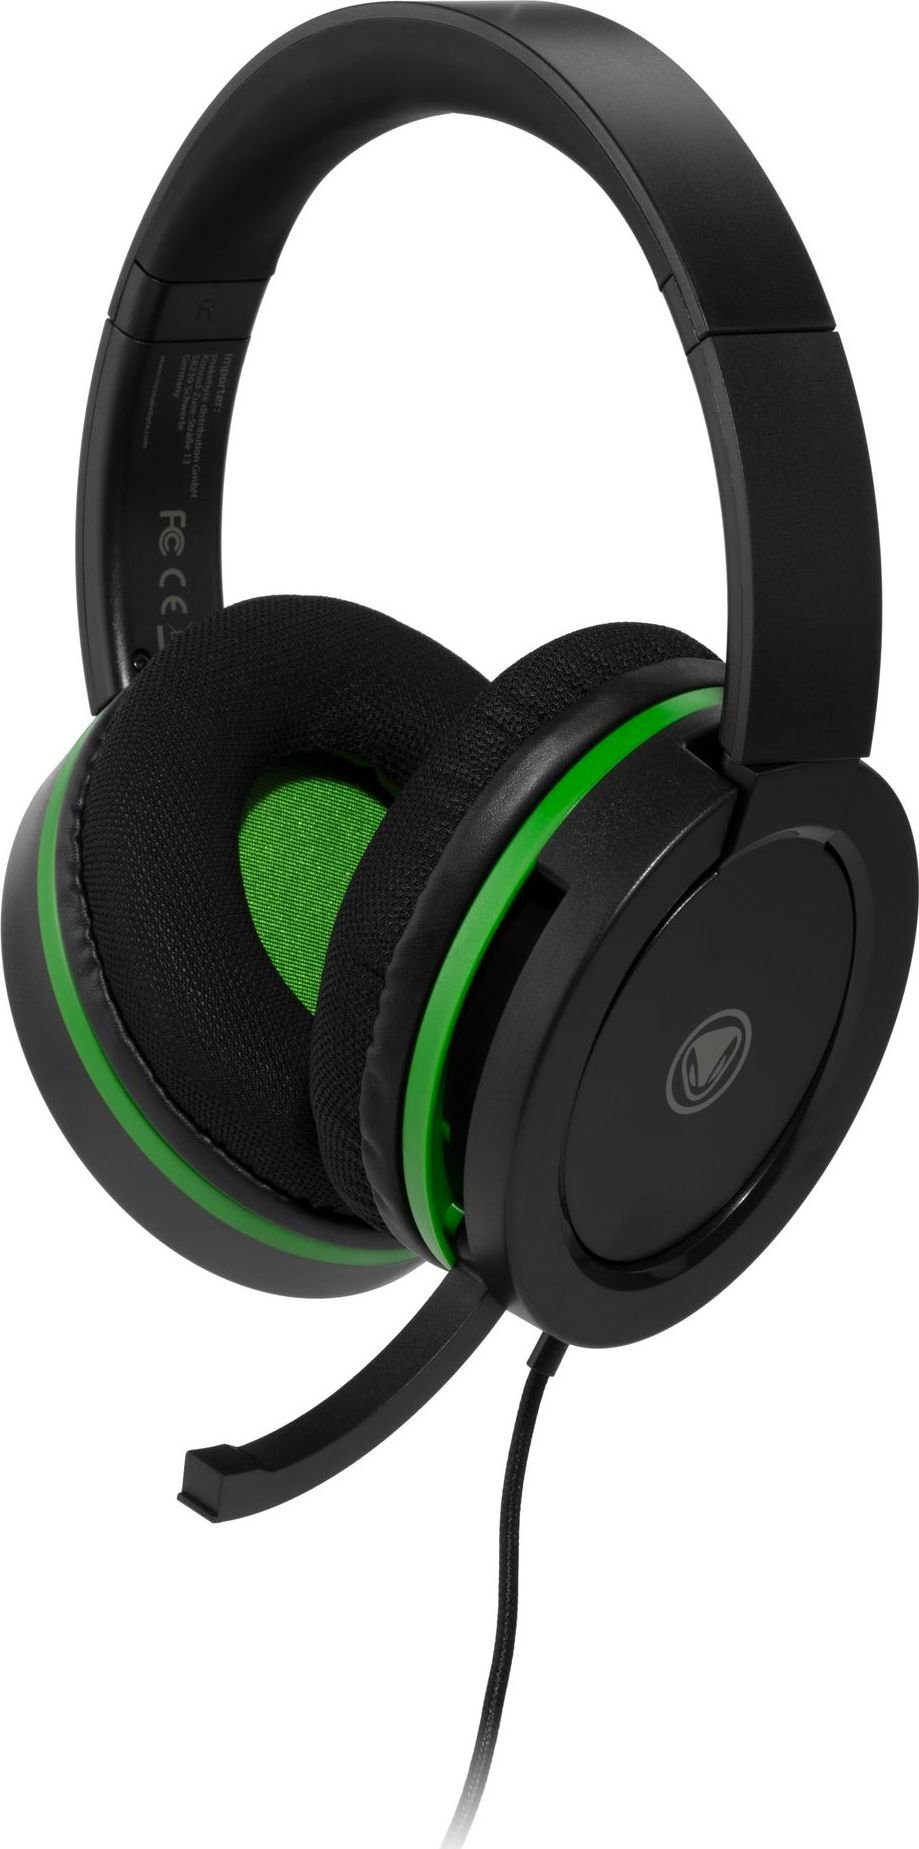 Casti pentru jocuri Xbox One Snakebyte Head Set Pro X,negru/verde